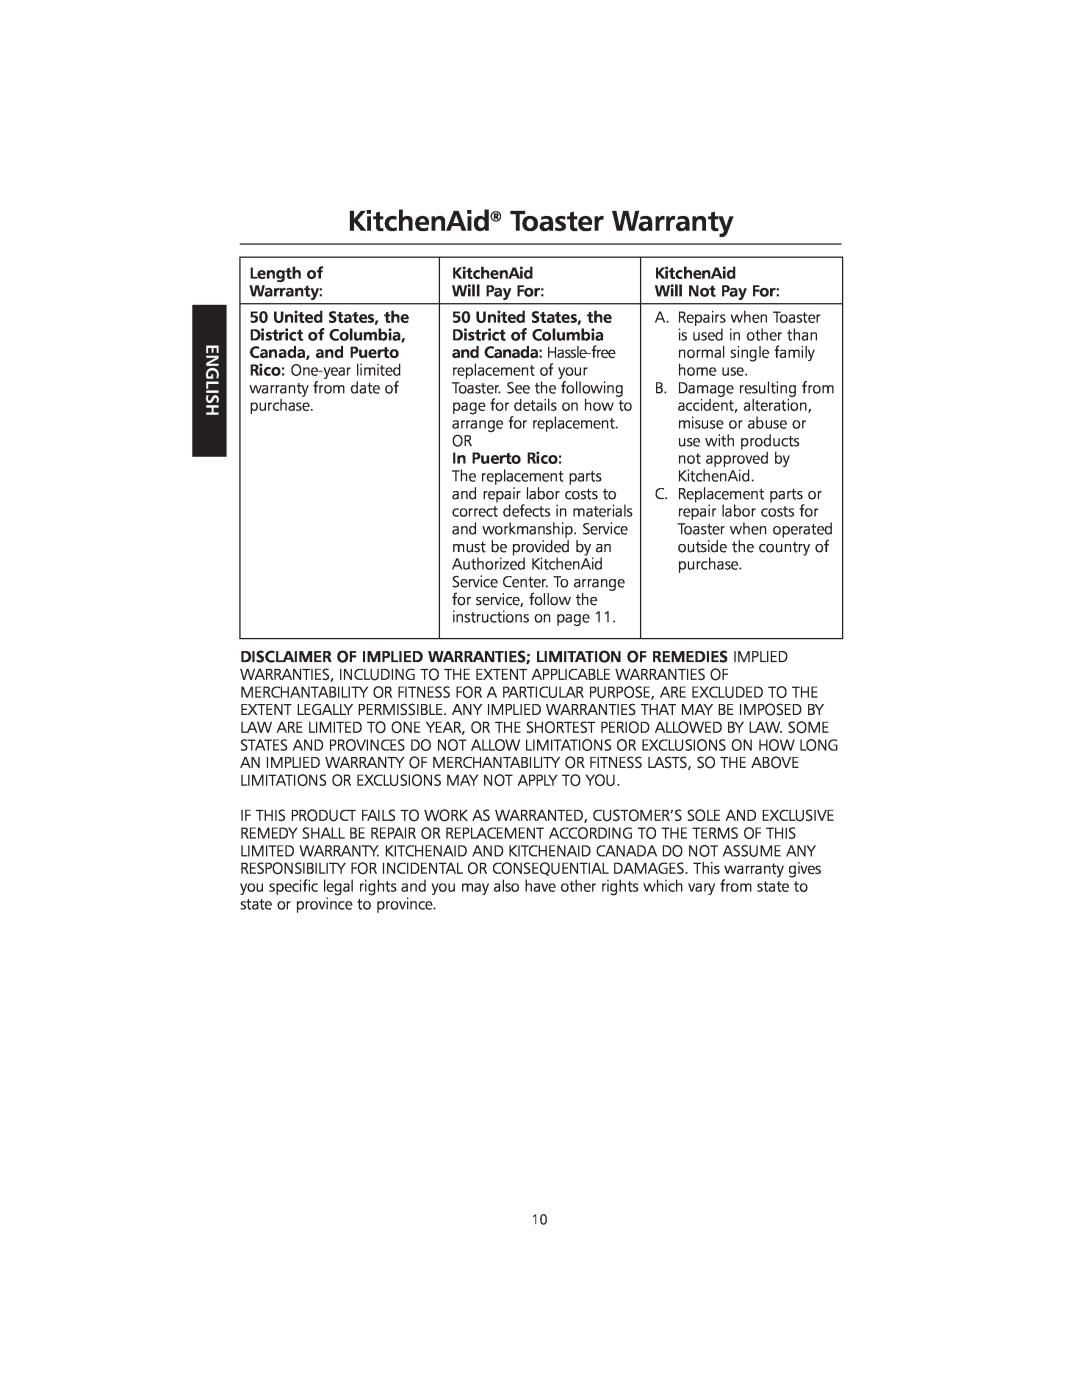 KitchenAid KMTT200 manual KitchenAid Toaster Warranty, correct defects in materials, and workmanship. Service 